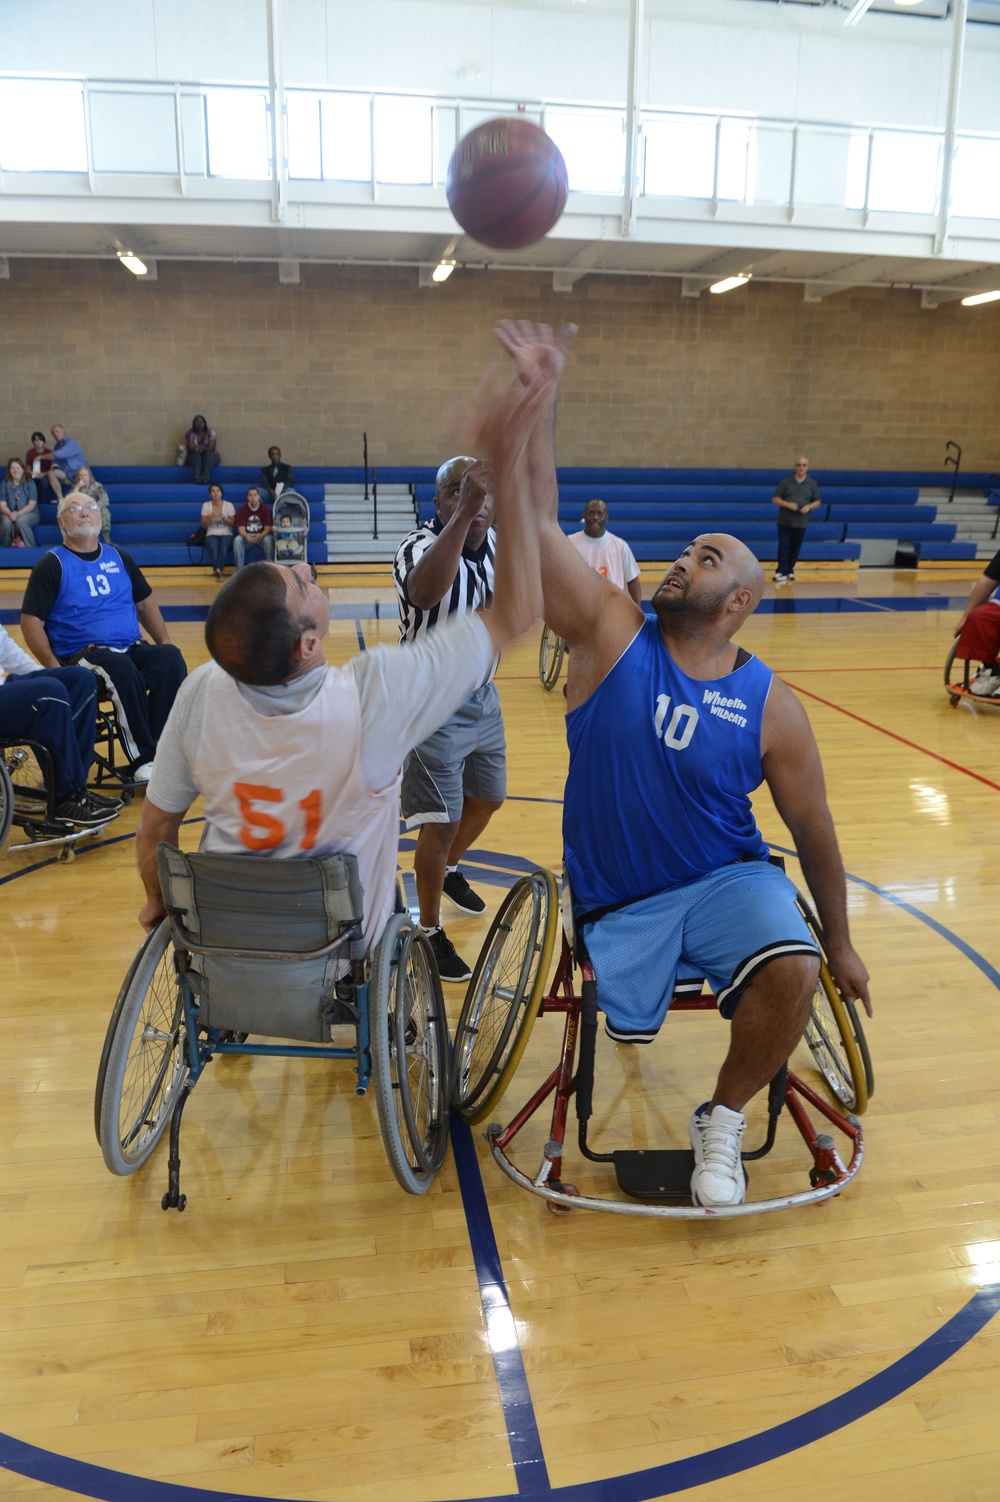 Wheelchair Basketball Game